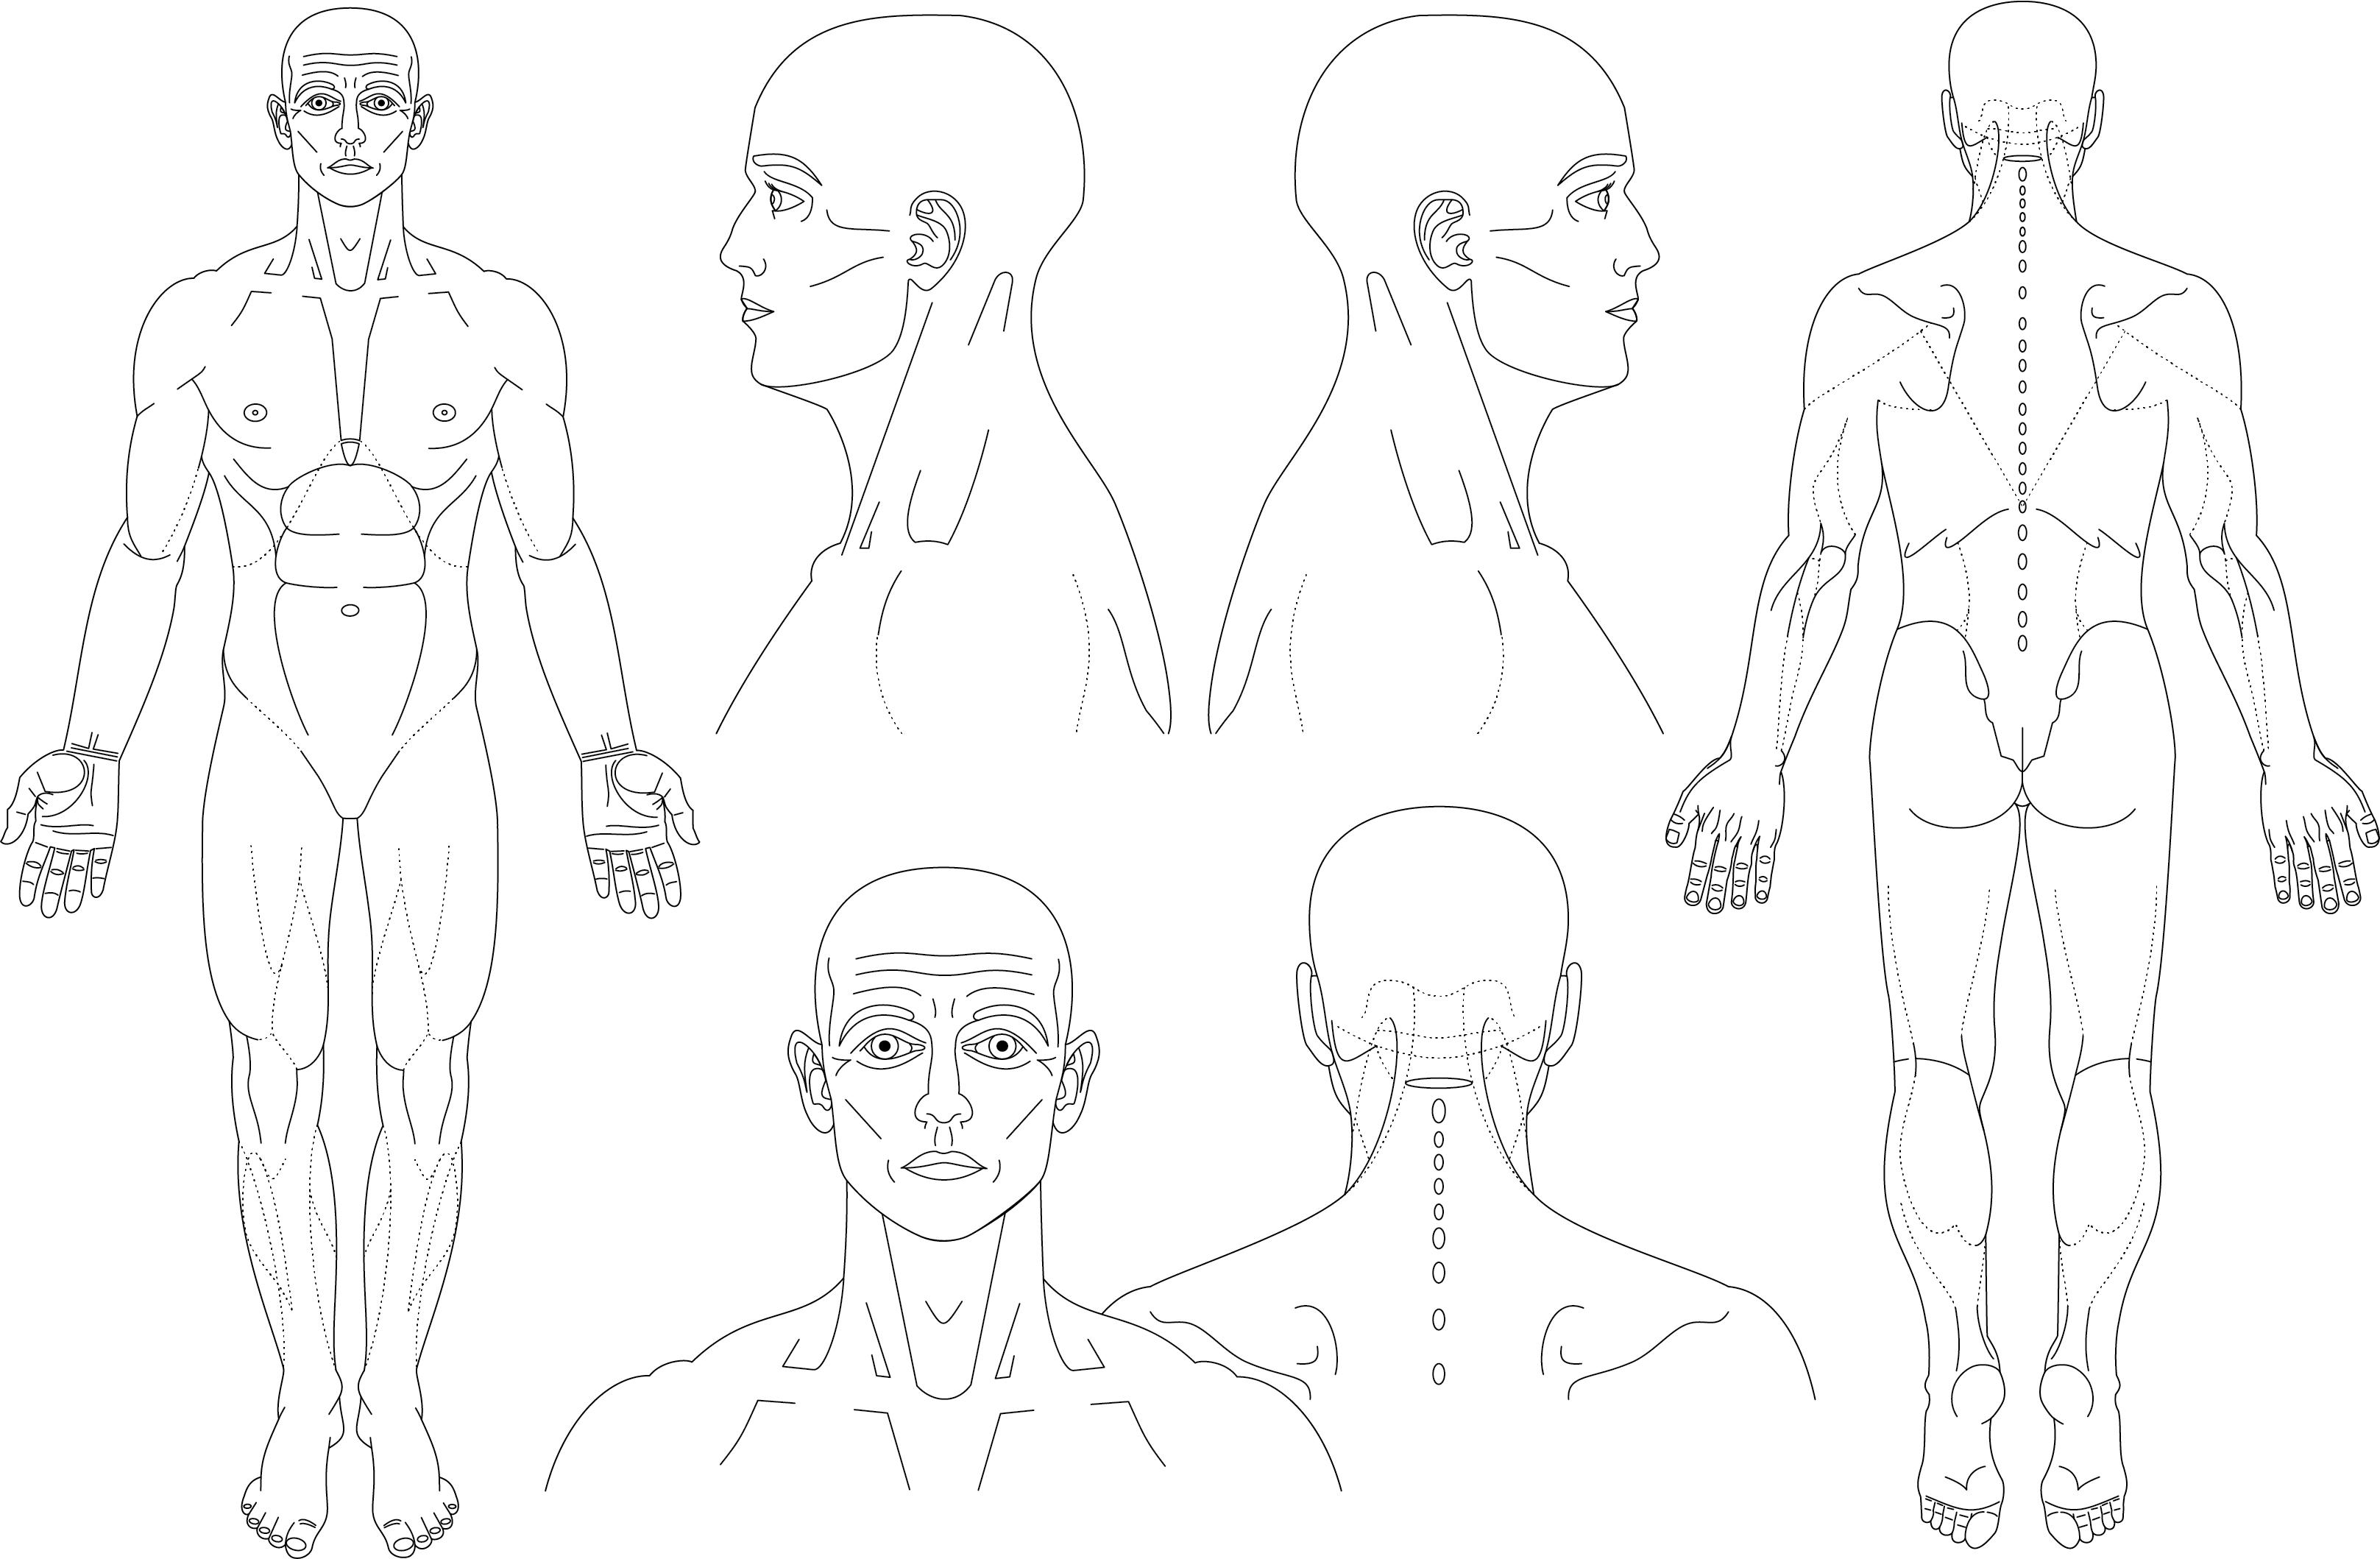 Body Parts Diagram Man / Free Human Body Parts, Download Free Clip Art